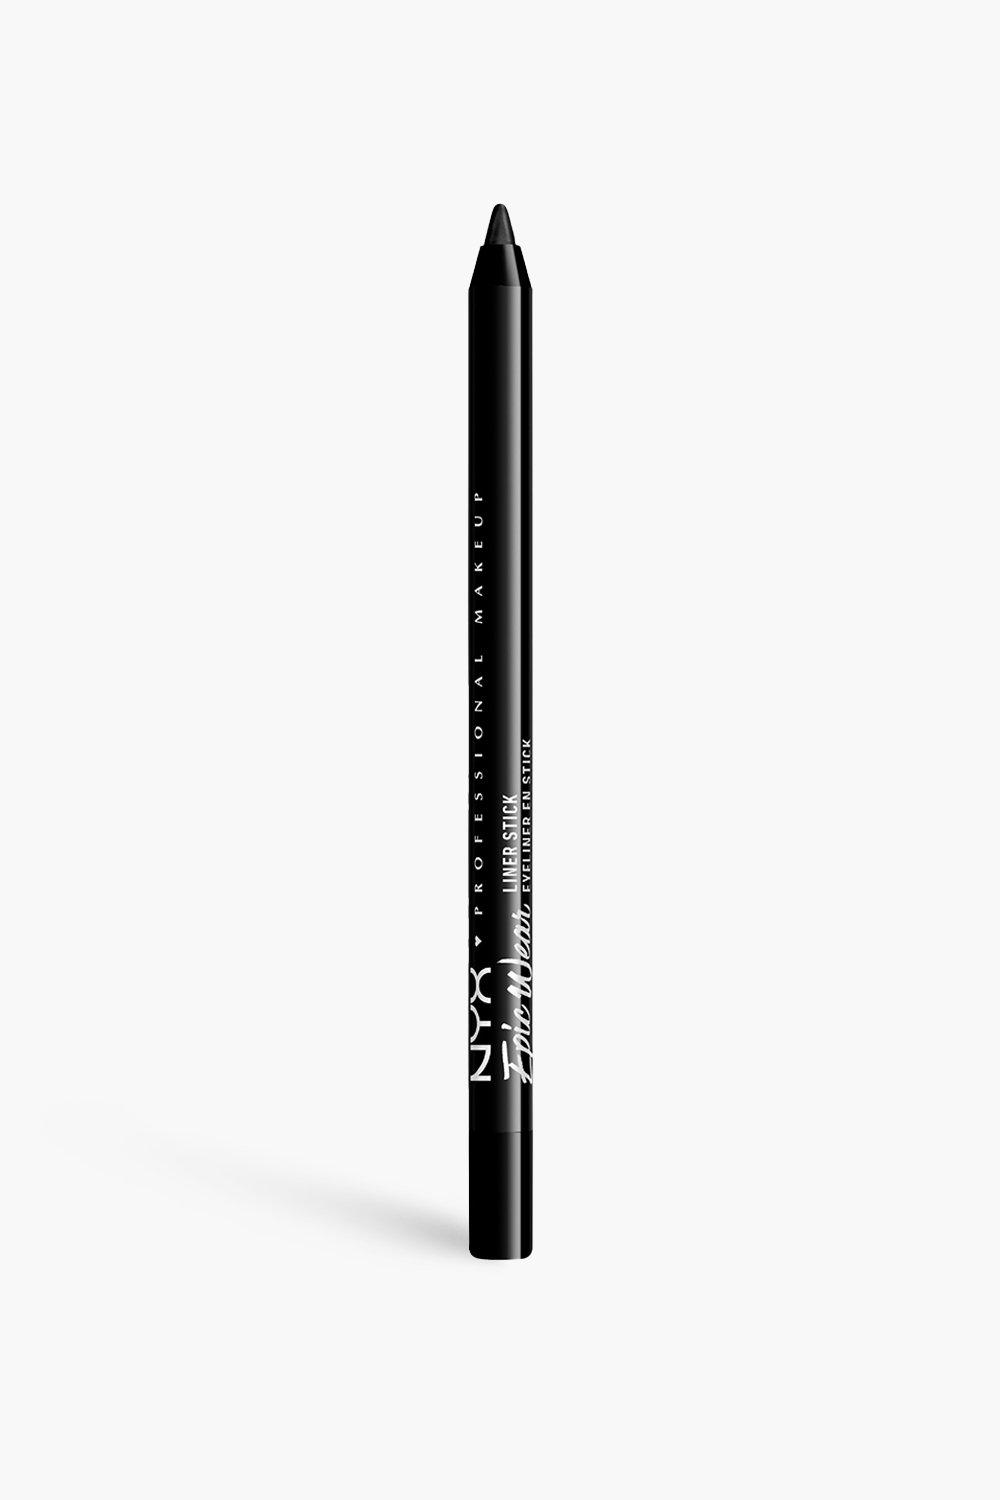 Nyx Professional Makeup Epic Wear Long Lasting Liner Stick, Pitch Black